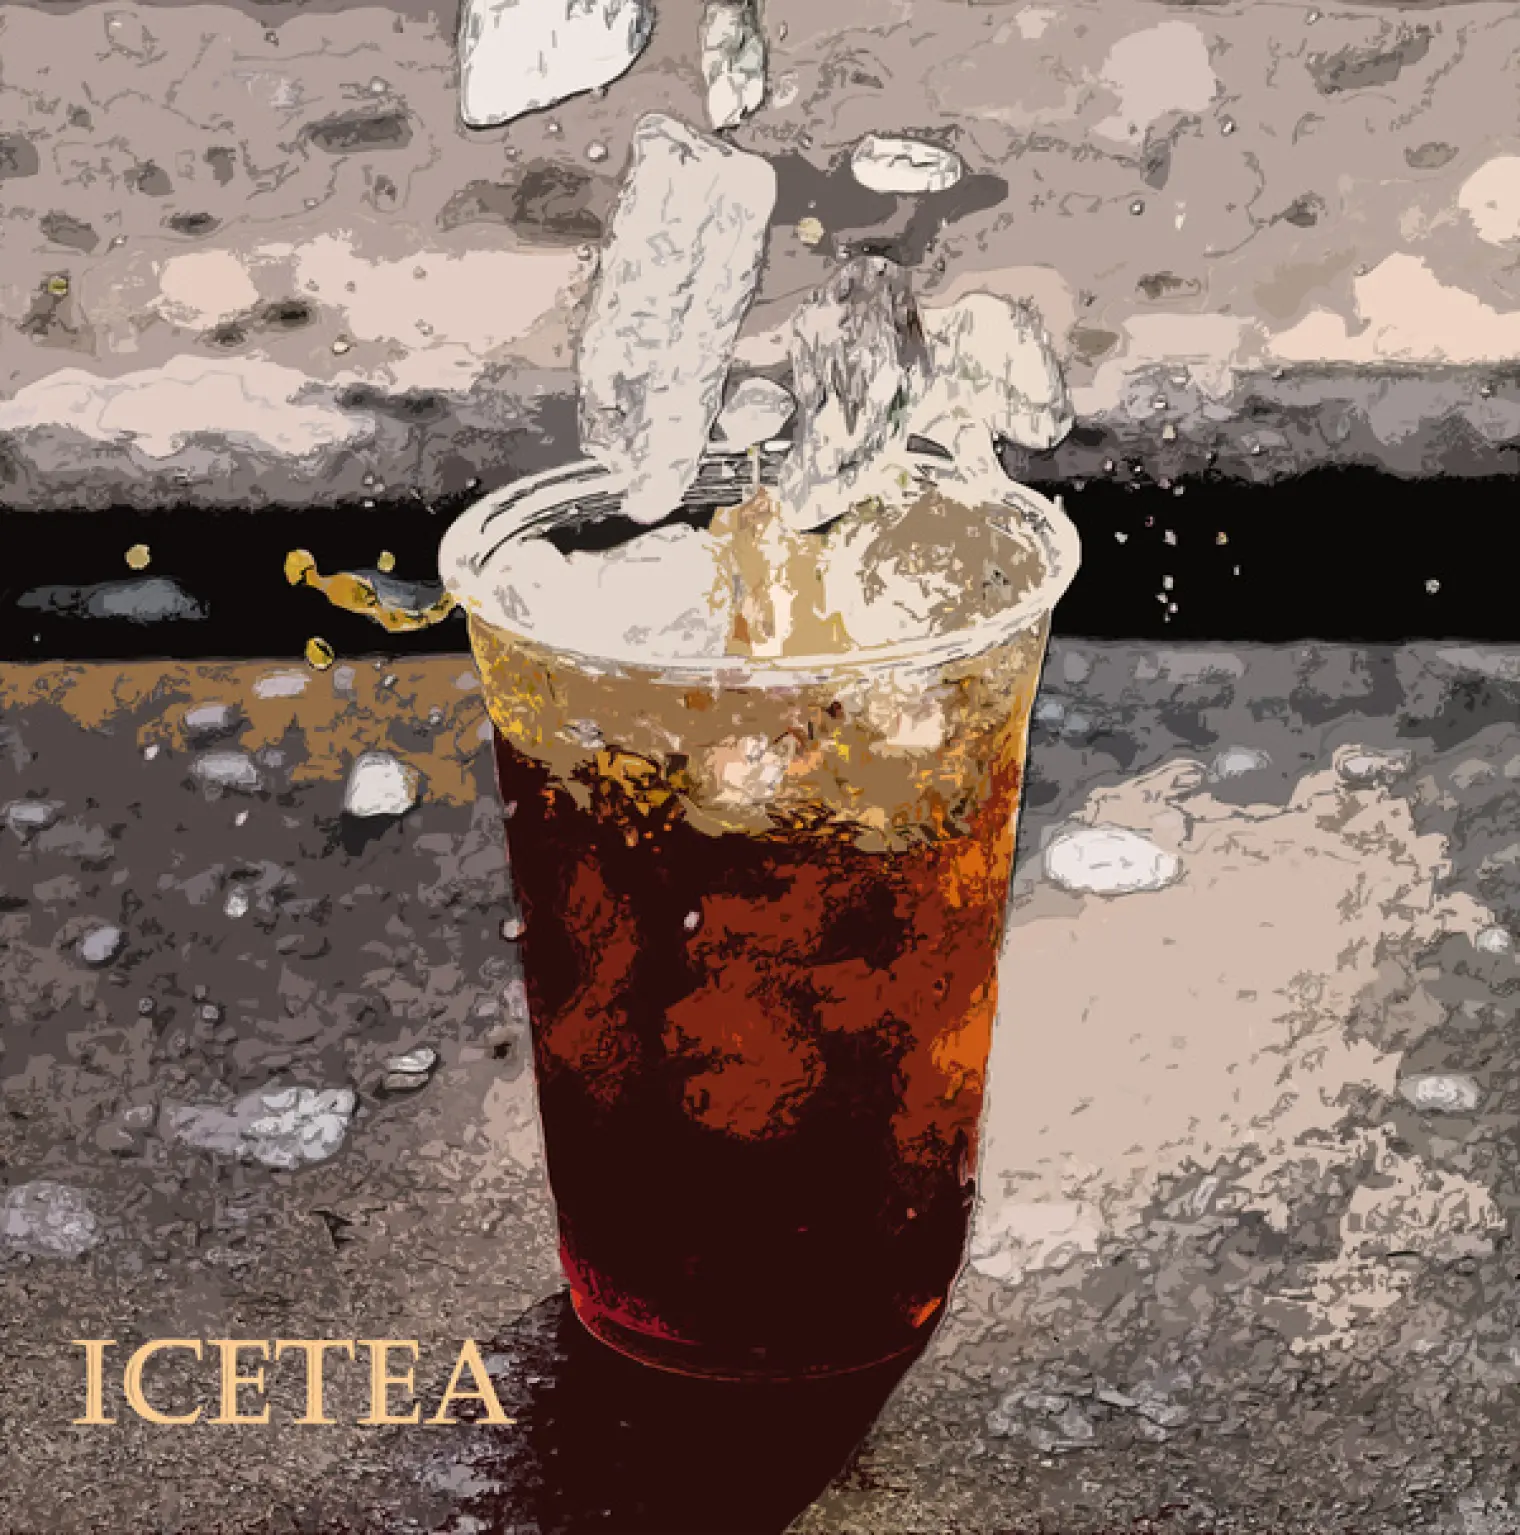 Icetea -  Dizzy Reece 